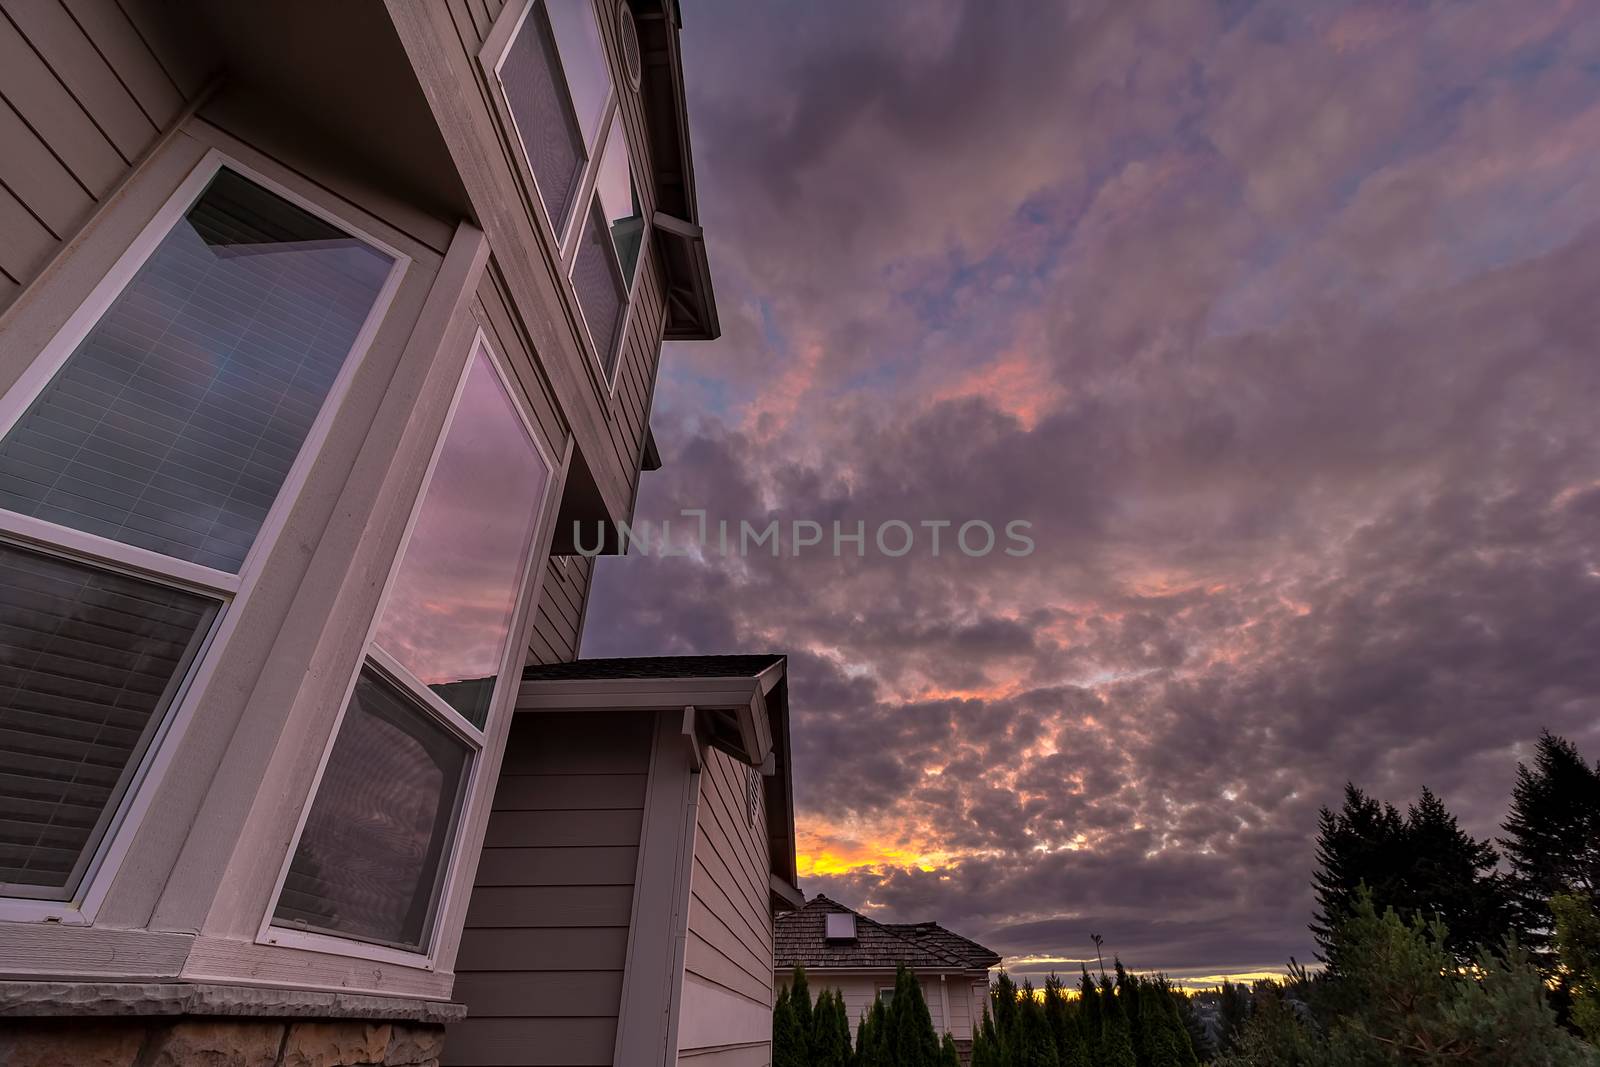 Reflection of sunset sky on windows of suburban neighborhood home in North America